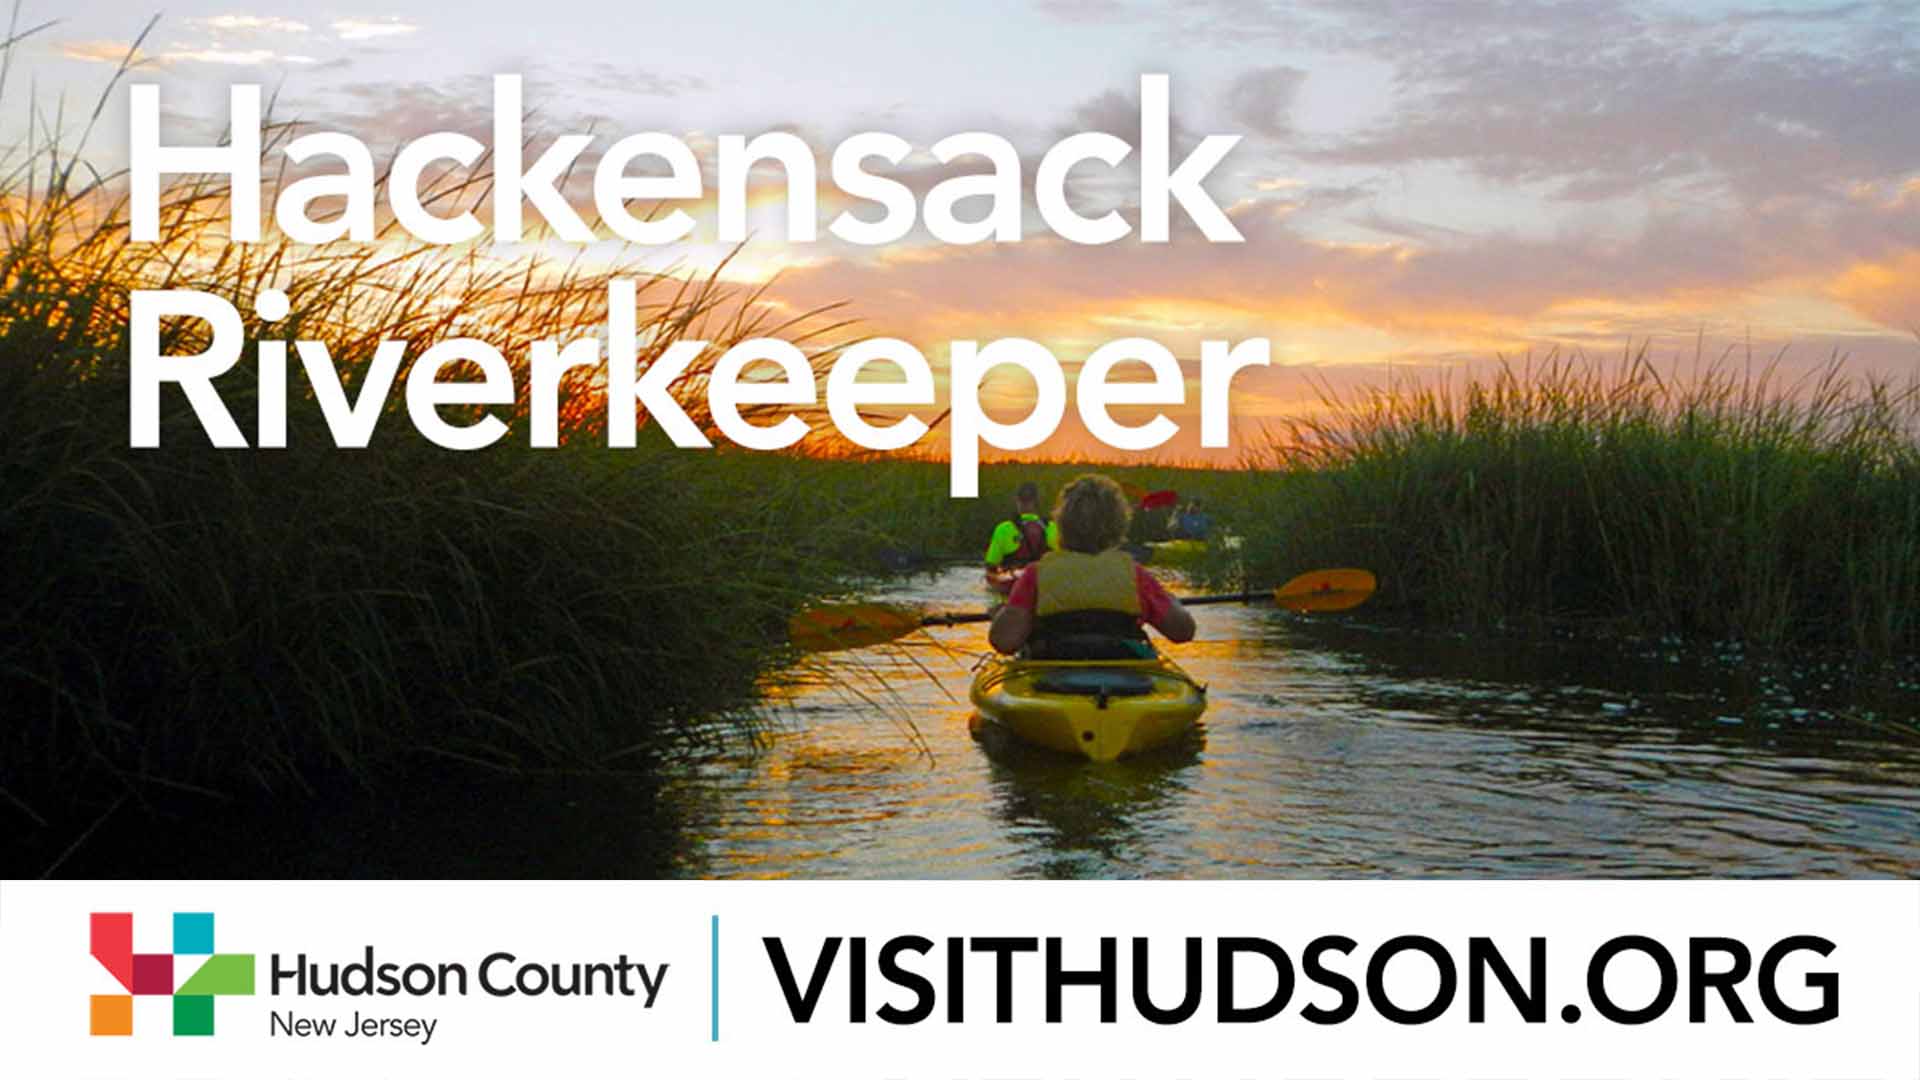 Hackensack Riverkeeper